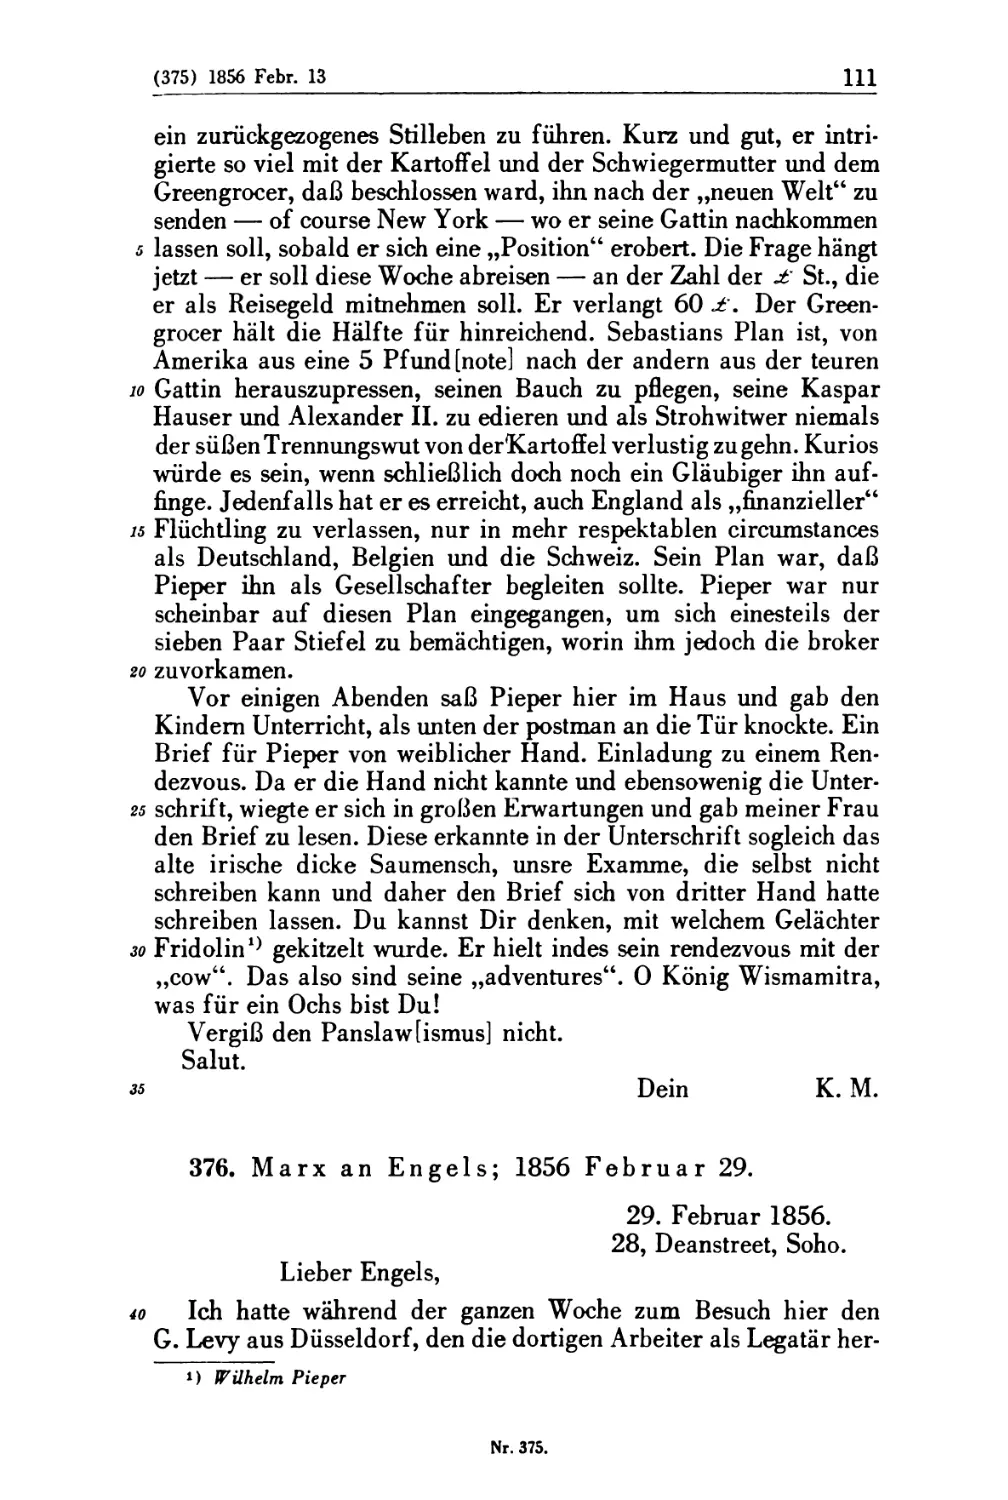 376. Marx an Engels; 1856 Februar 29